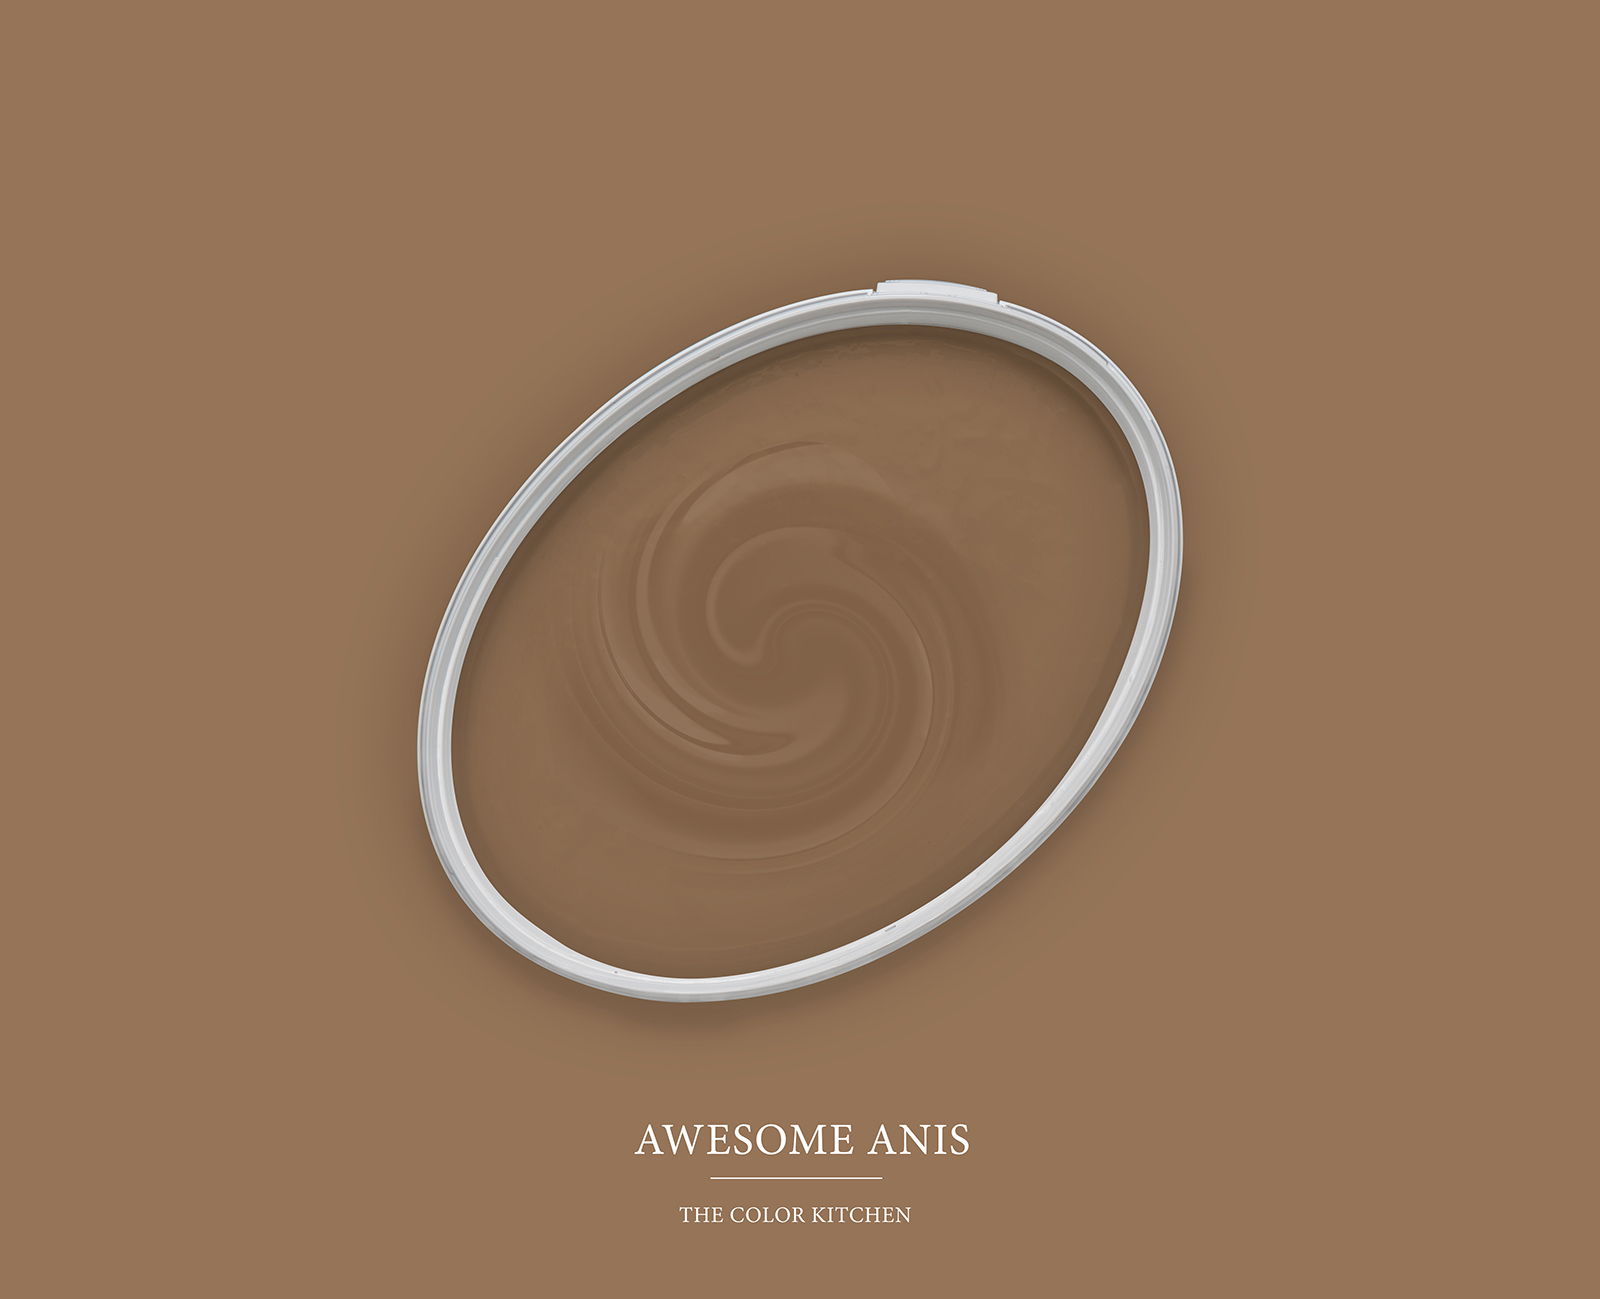 Muurverf TCK6007 »Awesome Anis« in gezellig bruin – 5,0 liter
